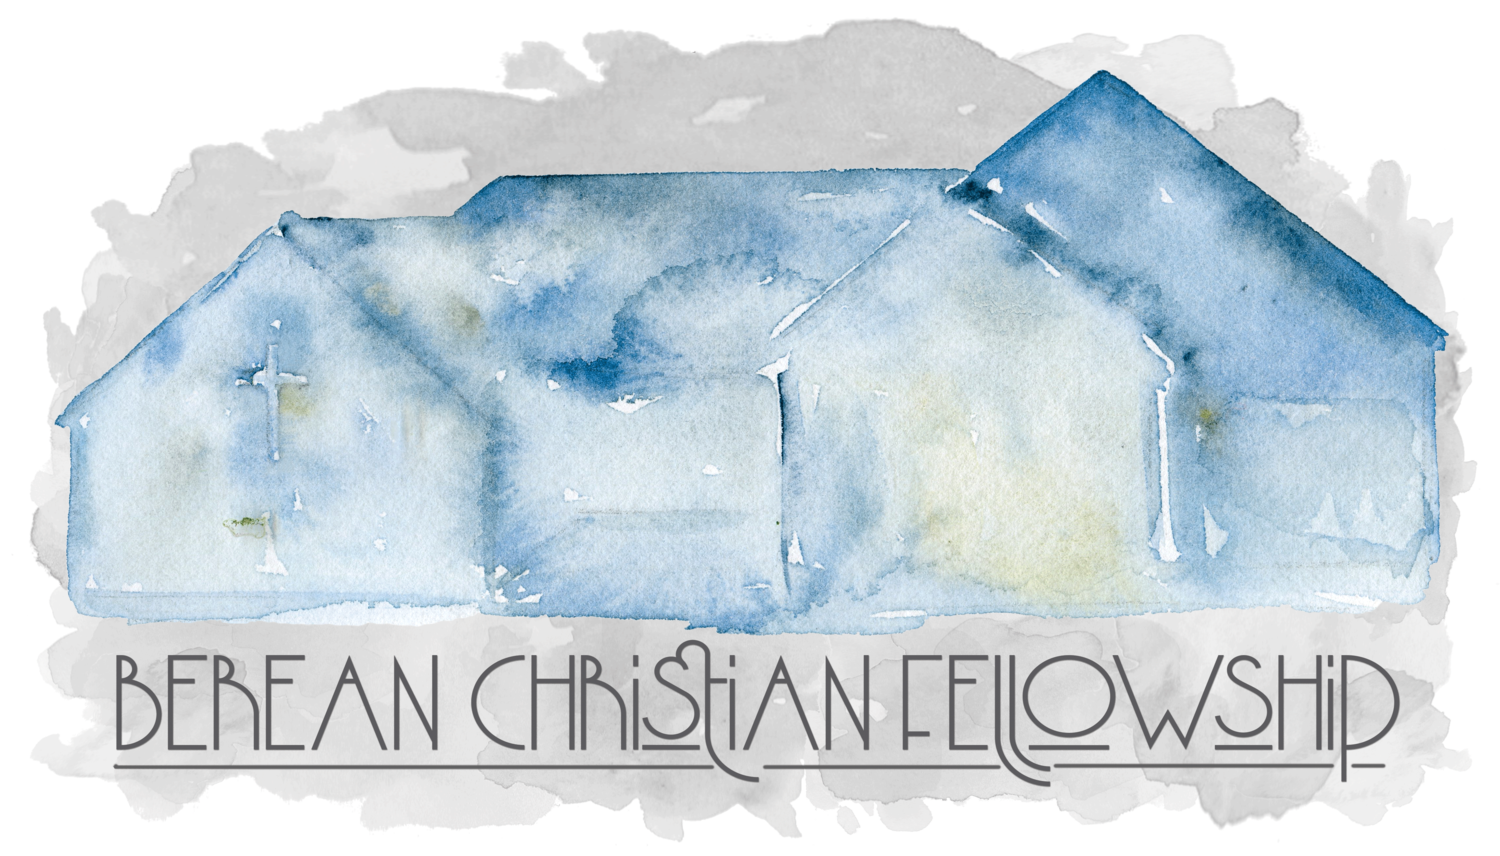 Berean Christian Fellowship